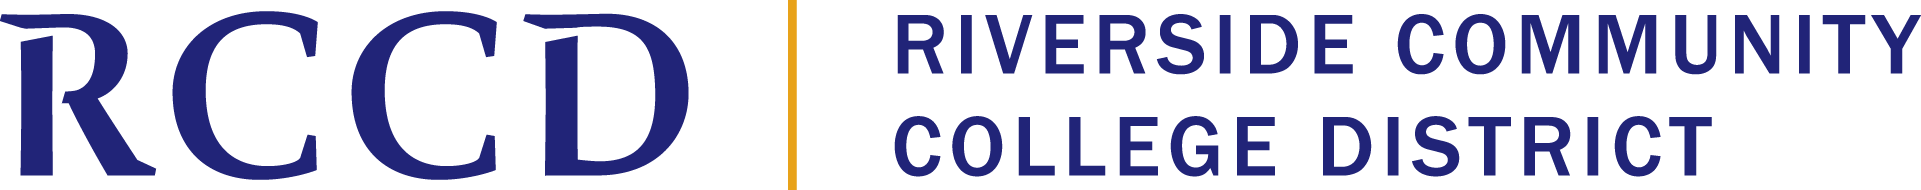 RCCD logo